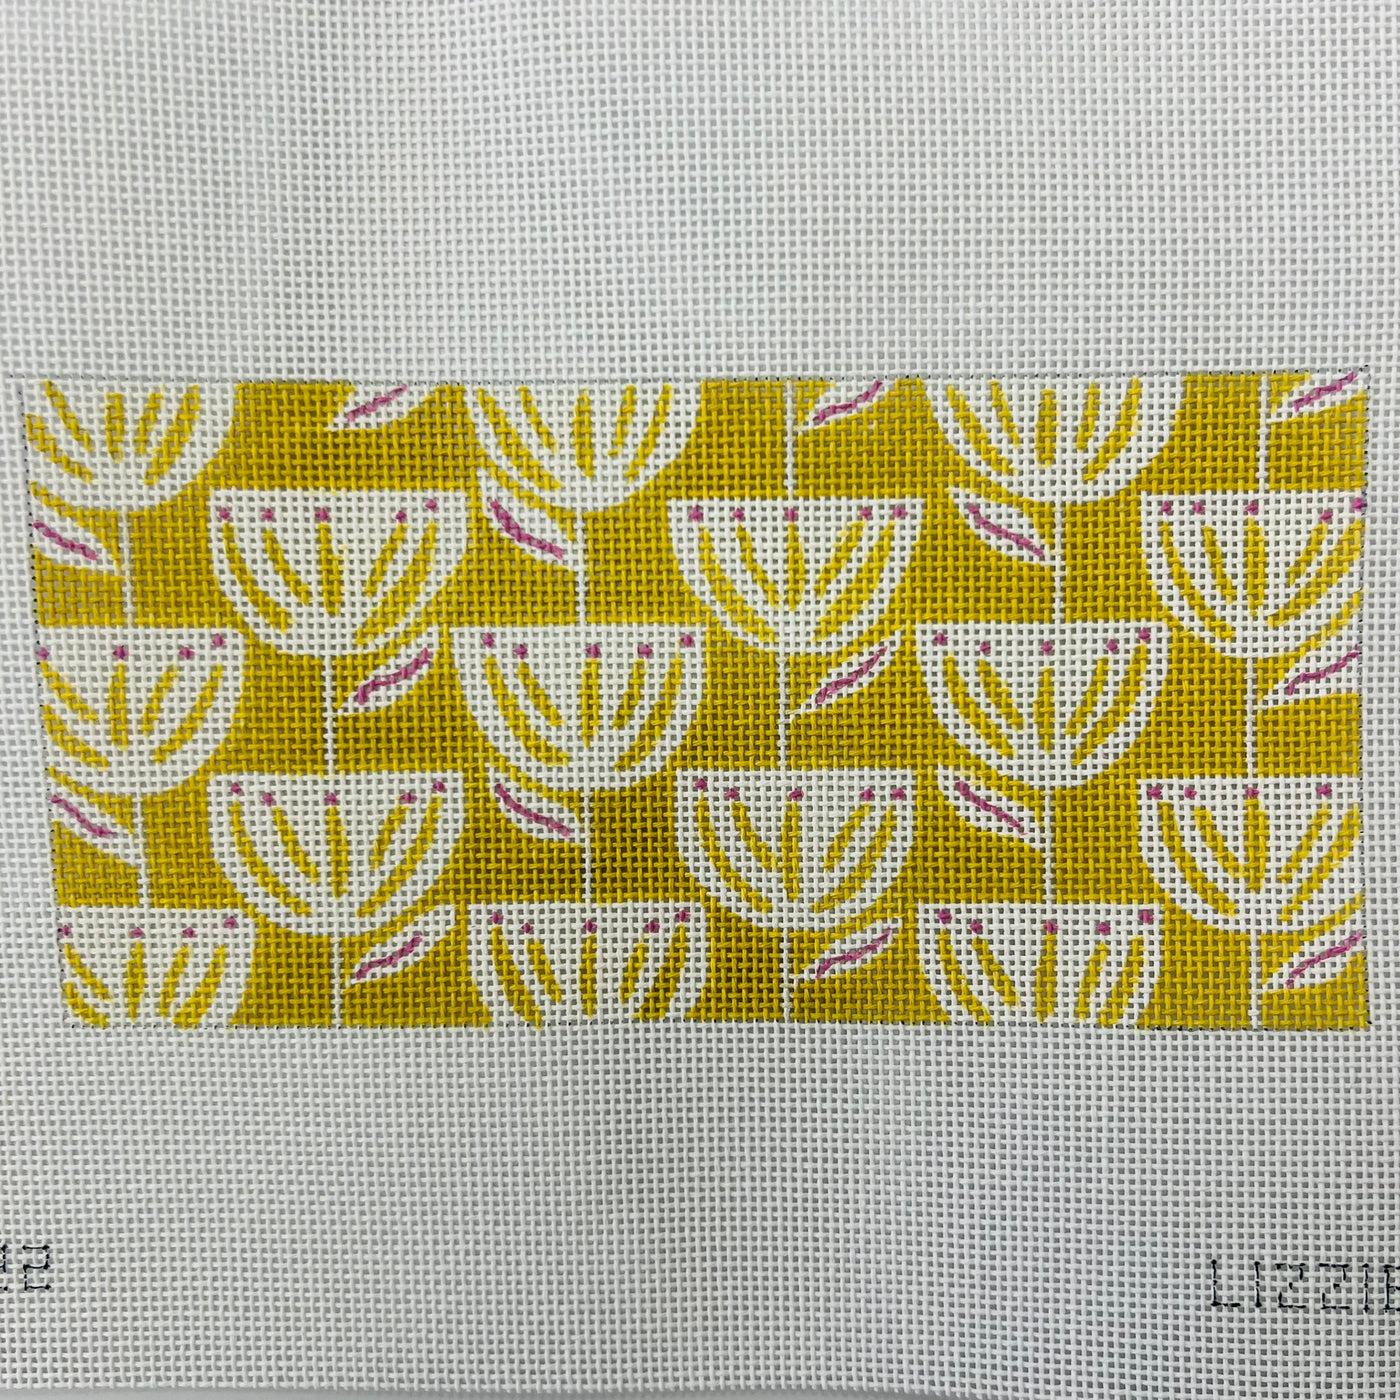 Tulips on Gold Eyeglass Case Needlepoint Canvas